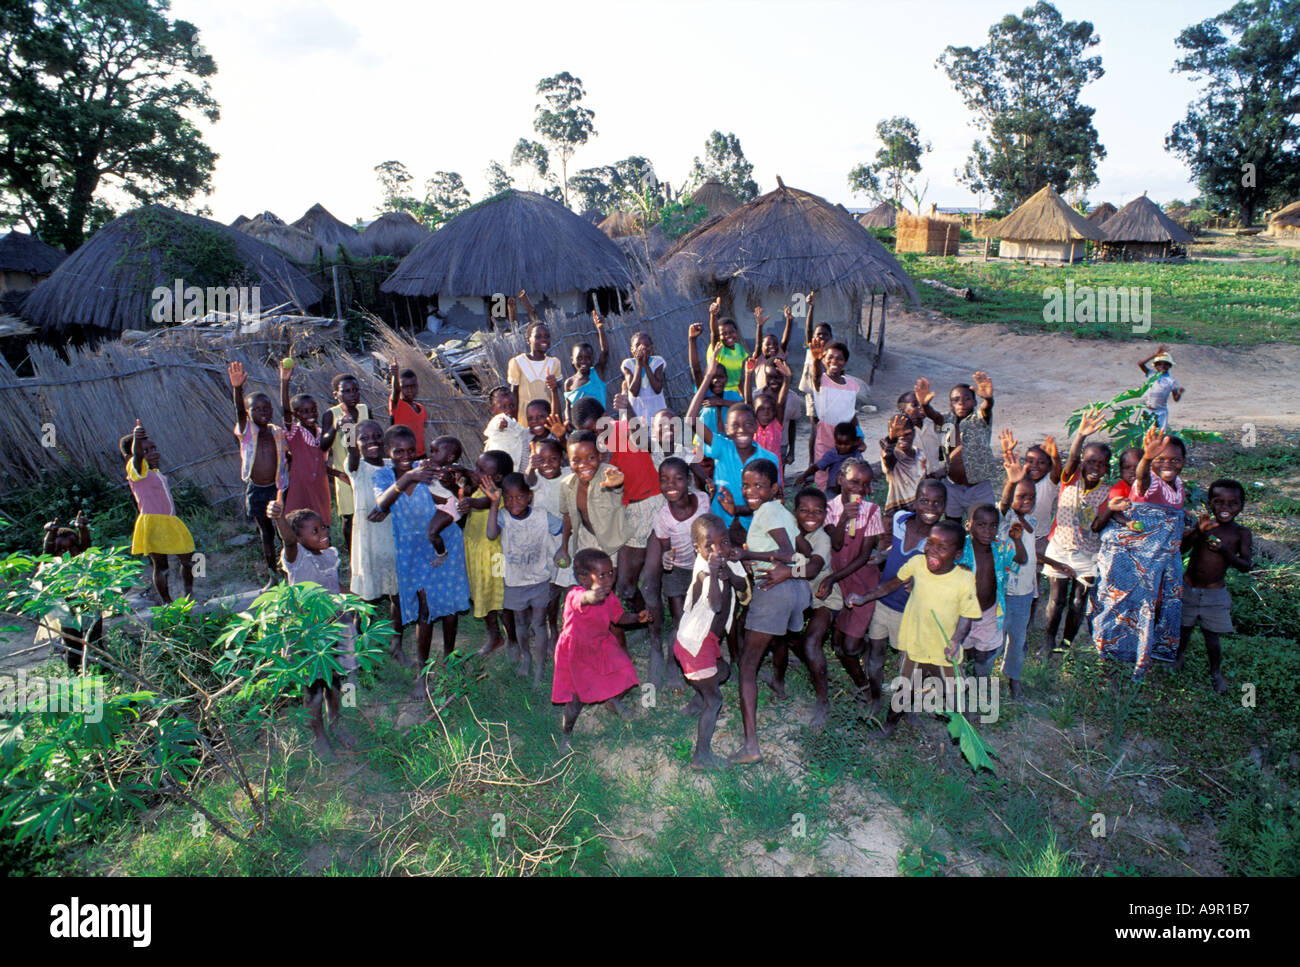 Children in rural village built on tobacco plantation in Zimbabwe Stock Photo